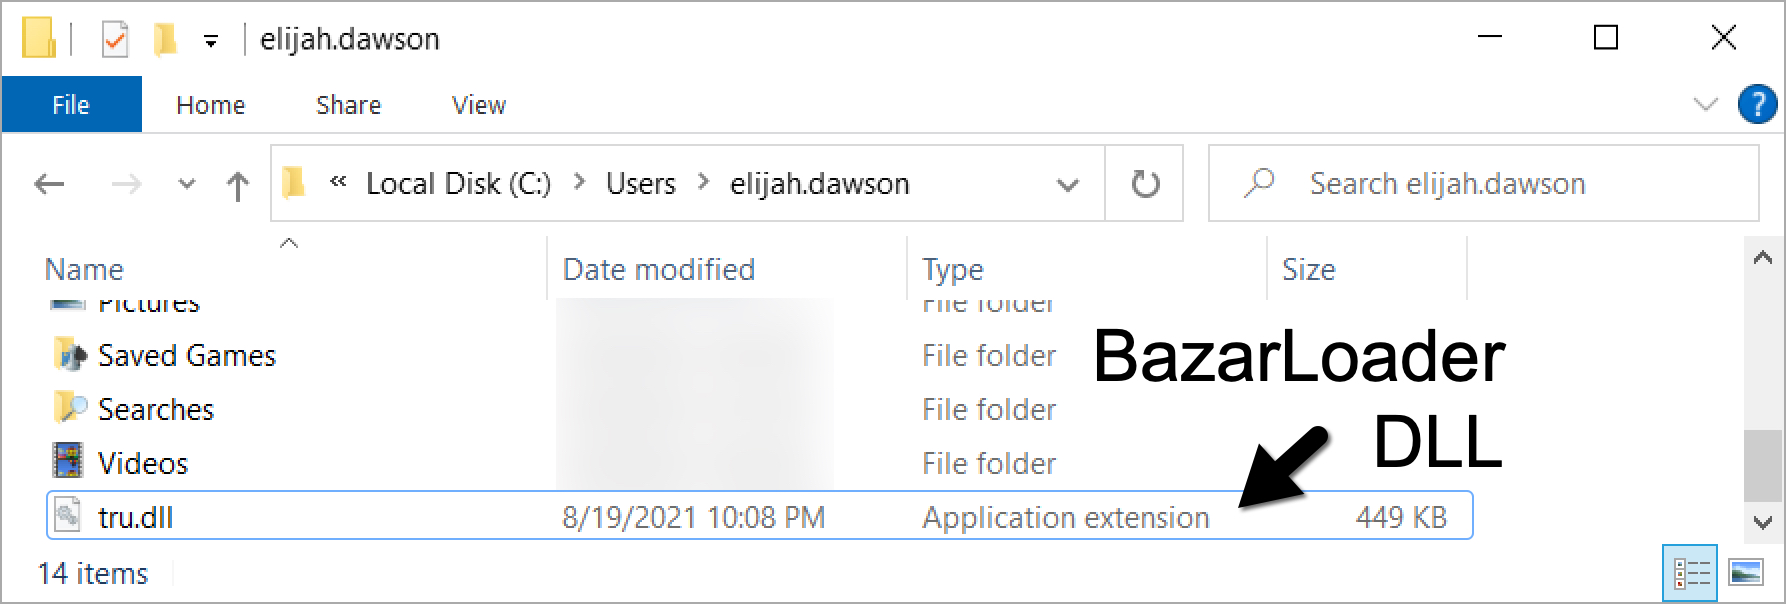 BazarLoader DLLは、感染ユーザーのホームディレクトリに保存される。スクリーンショットの黒い矢印はこのDLLがあらわれる場所を示す 